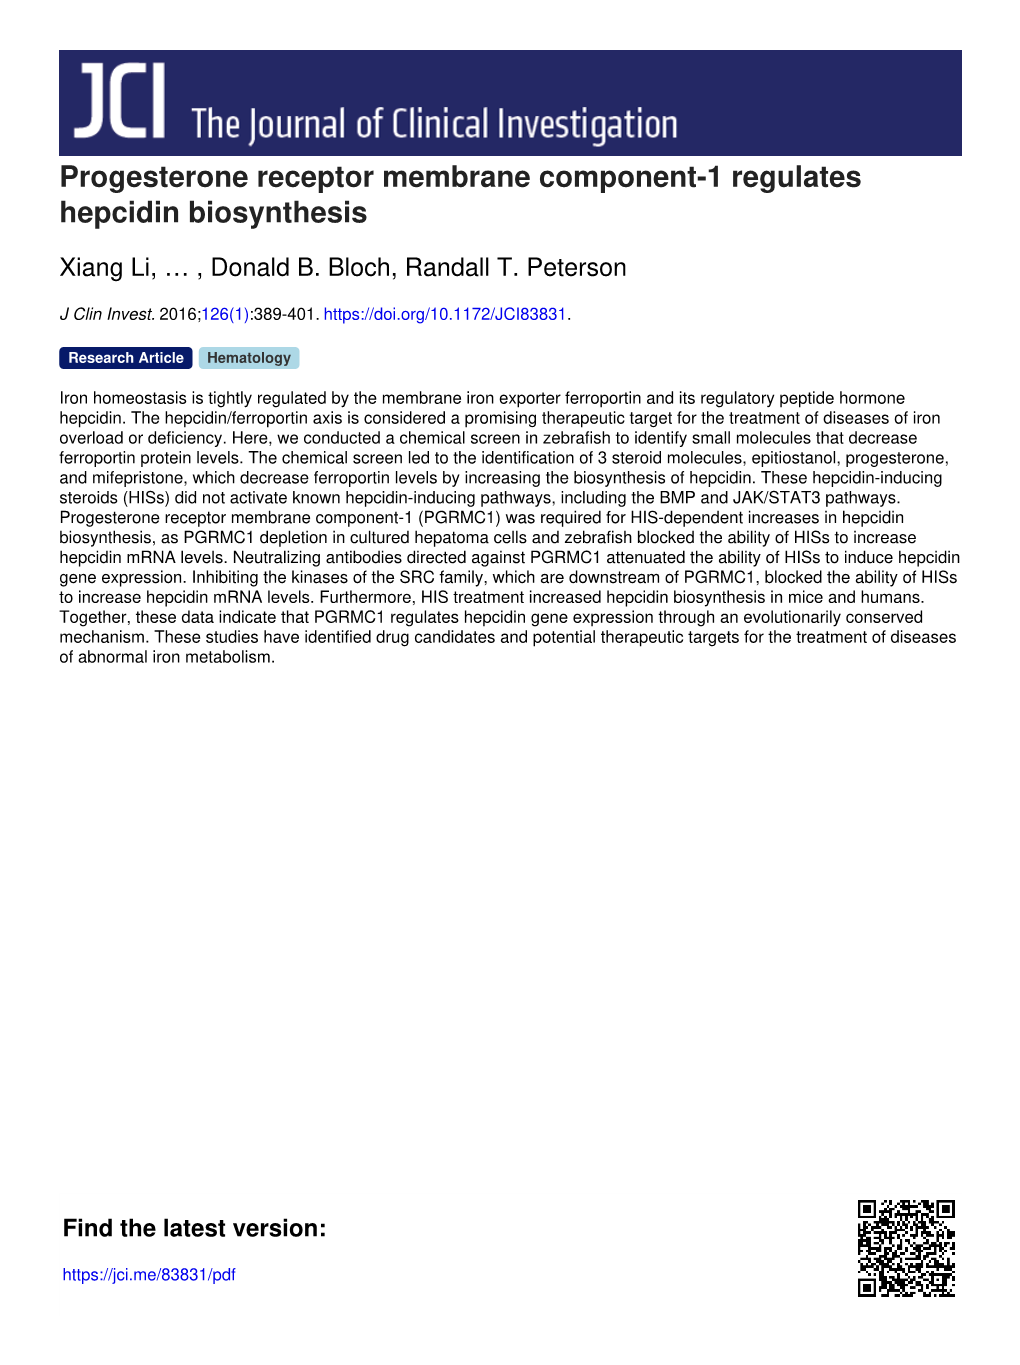 Progesterone Receptor Membrane Component-1 Regulates Hepcidin Biosynthesis